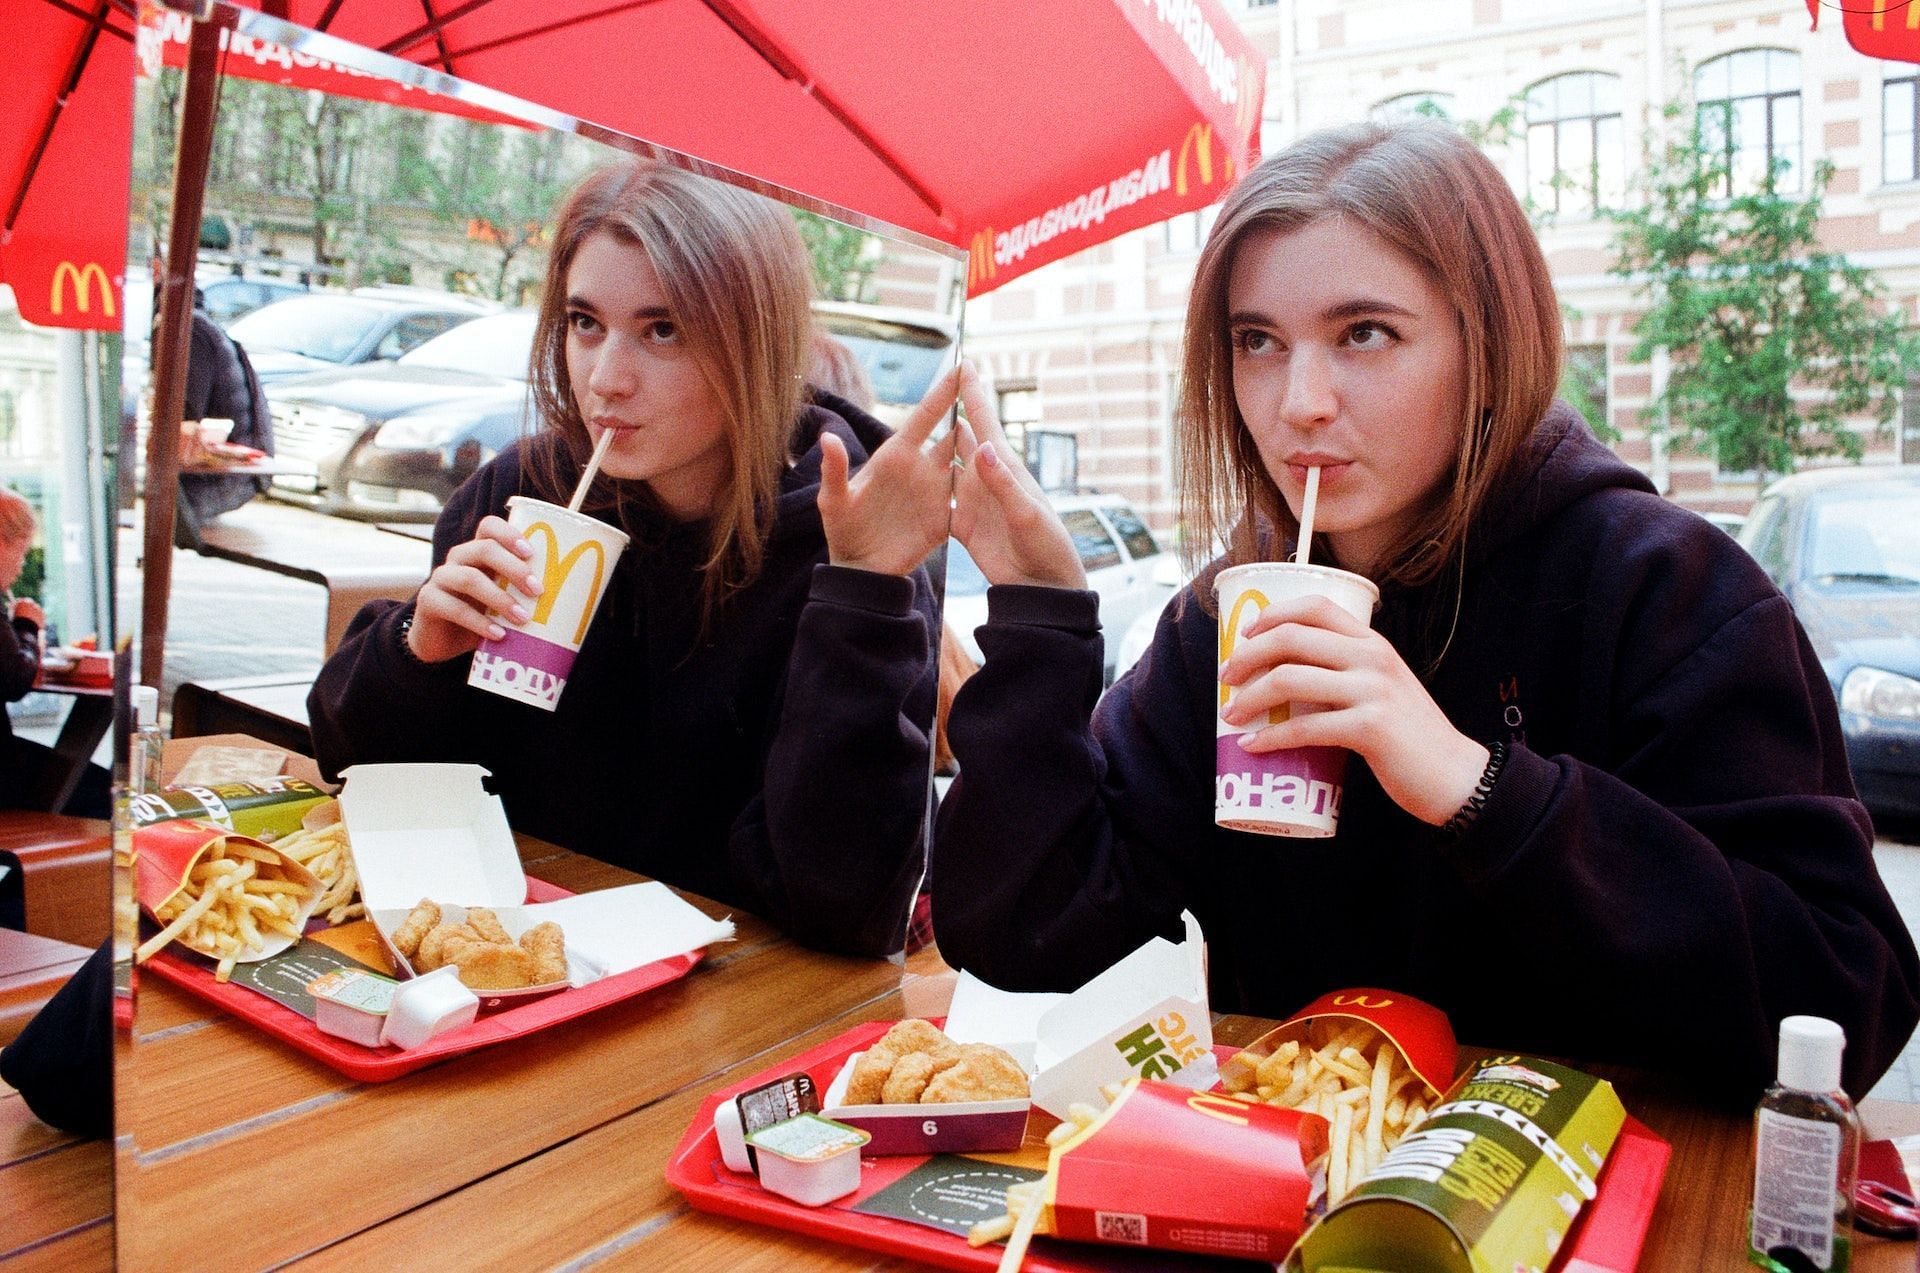 People with bulimia nervosa binge eat a large amount of food over a short period. (Photo via Pexels/Darya Sannikova)